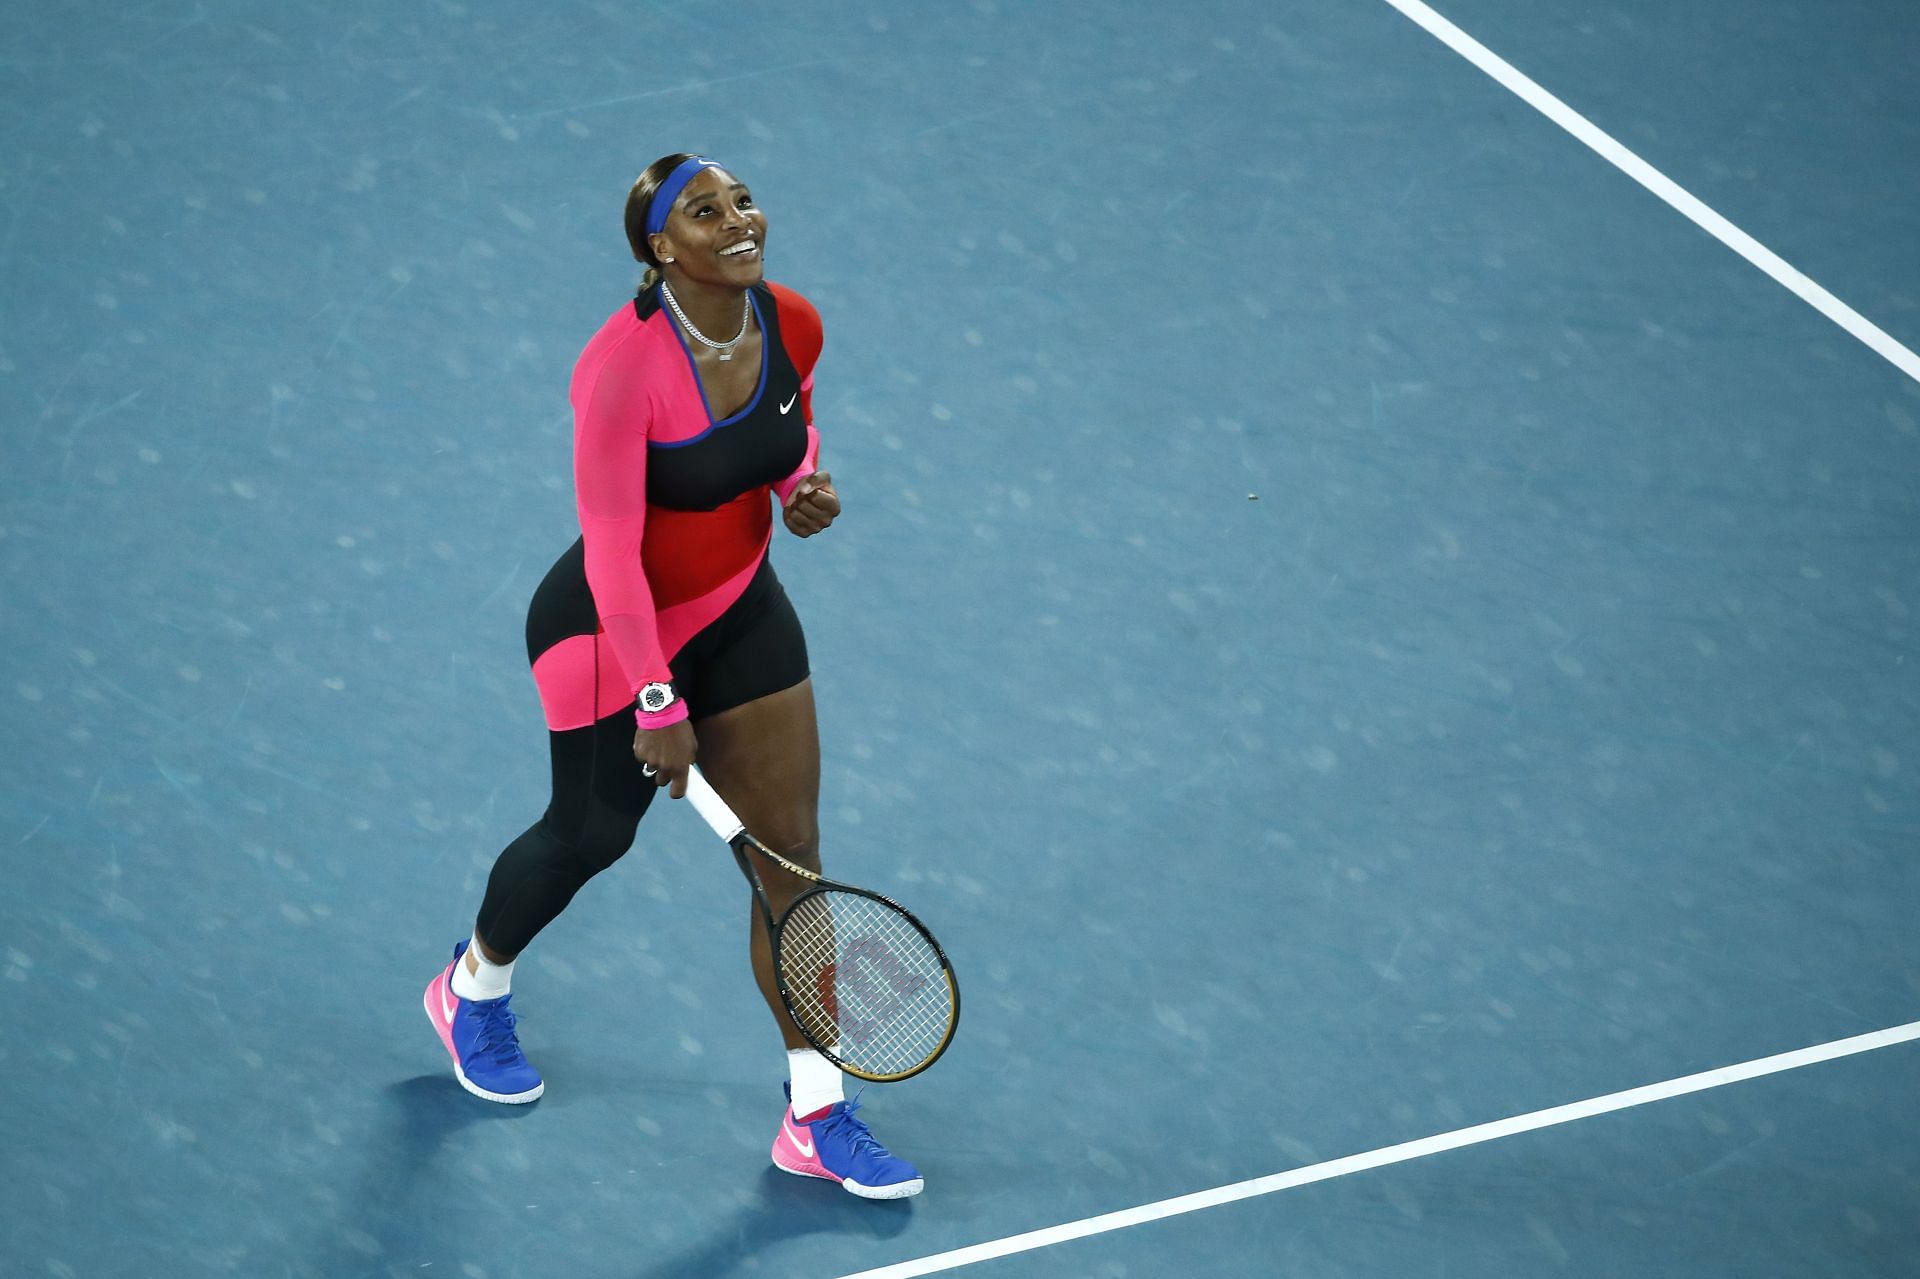 Serena Williams at the Australian Open 2021